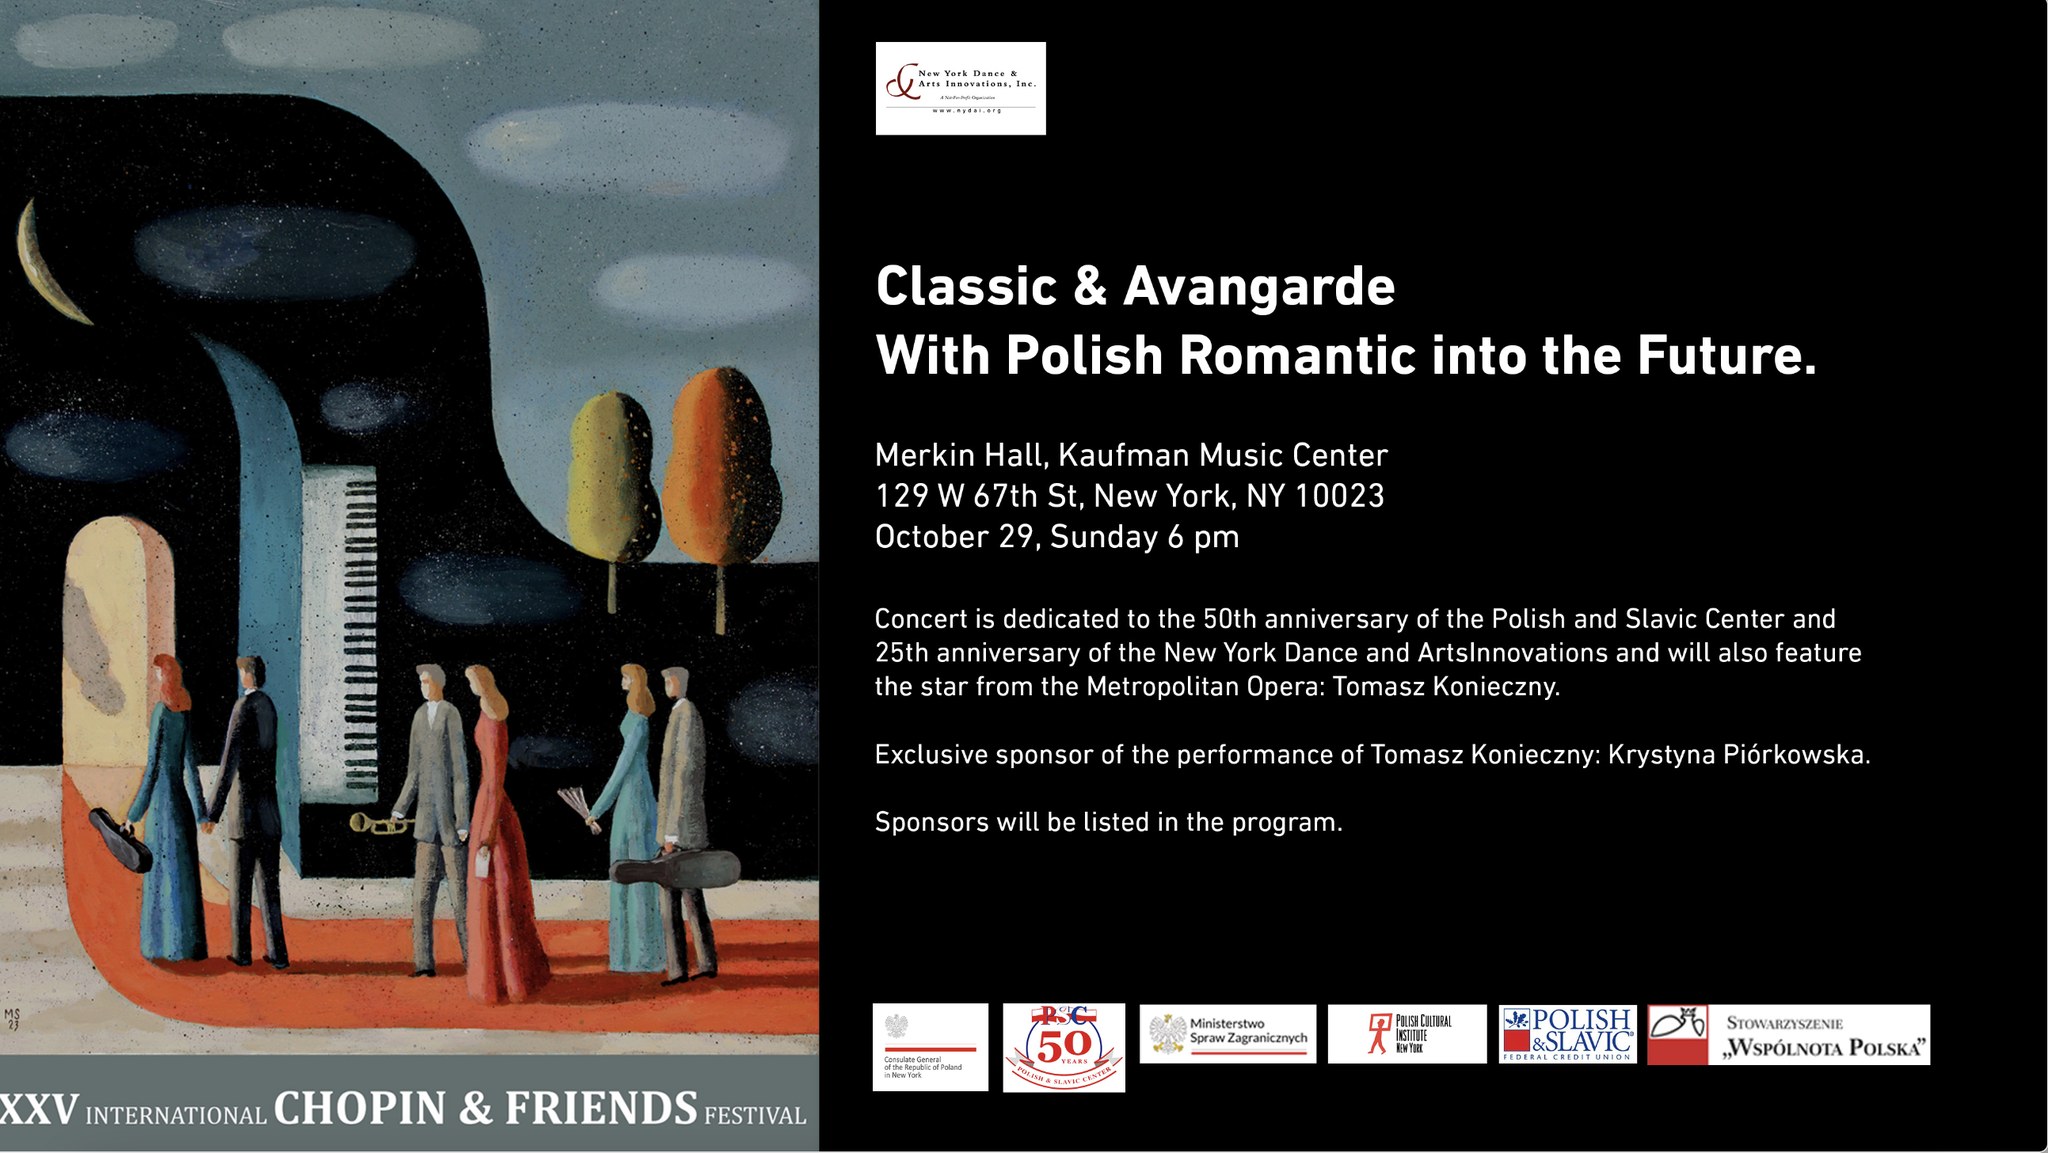 XXV International Chopin & Friends Festival: Classic & Avant-garde with Polish Romantic Music into the Future Concert- Opening Gala